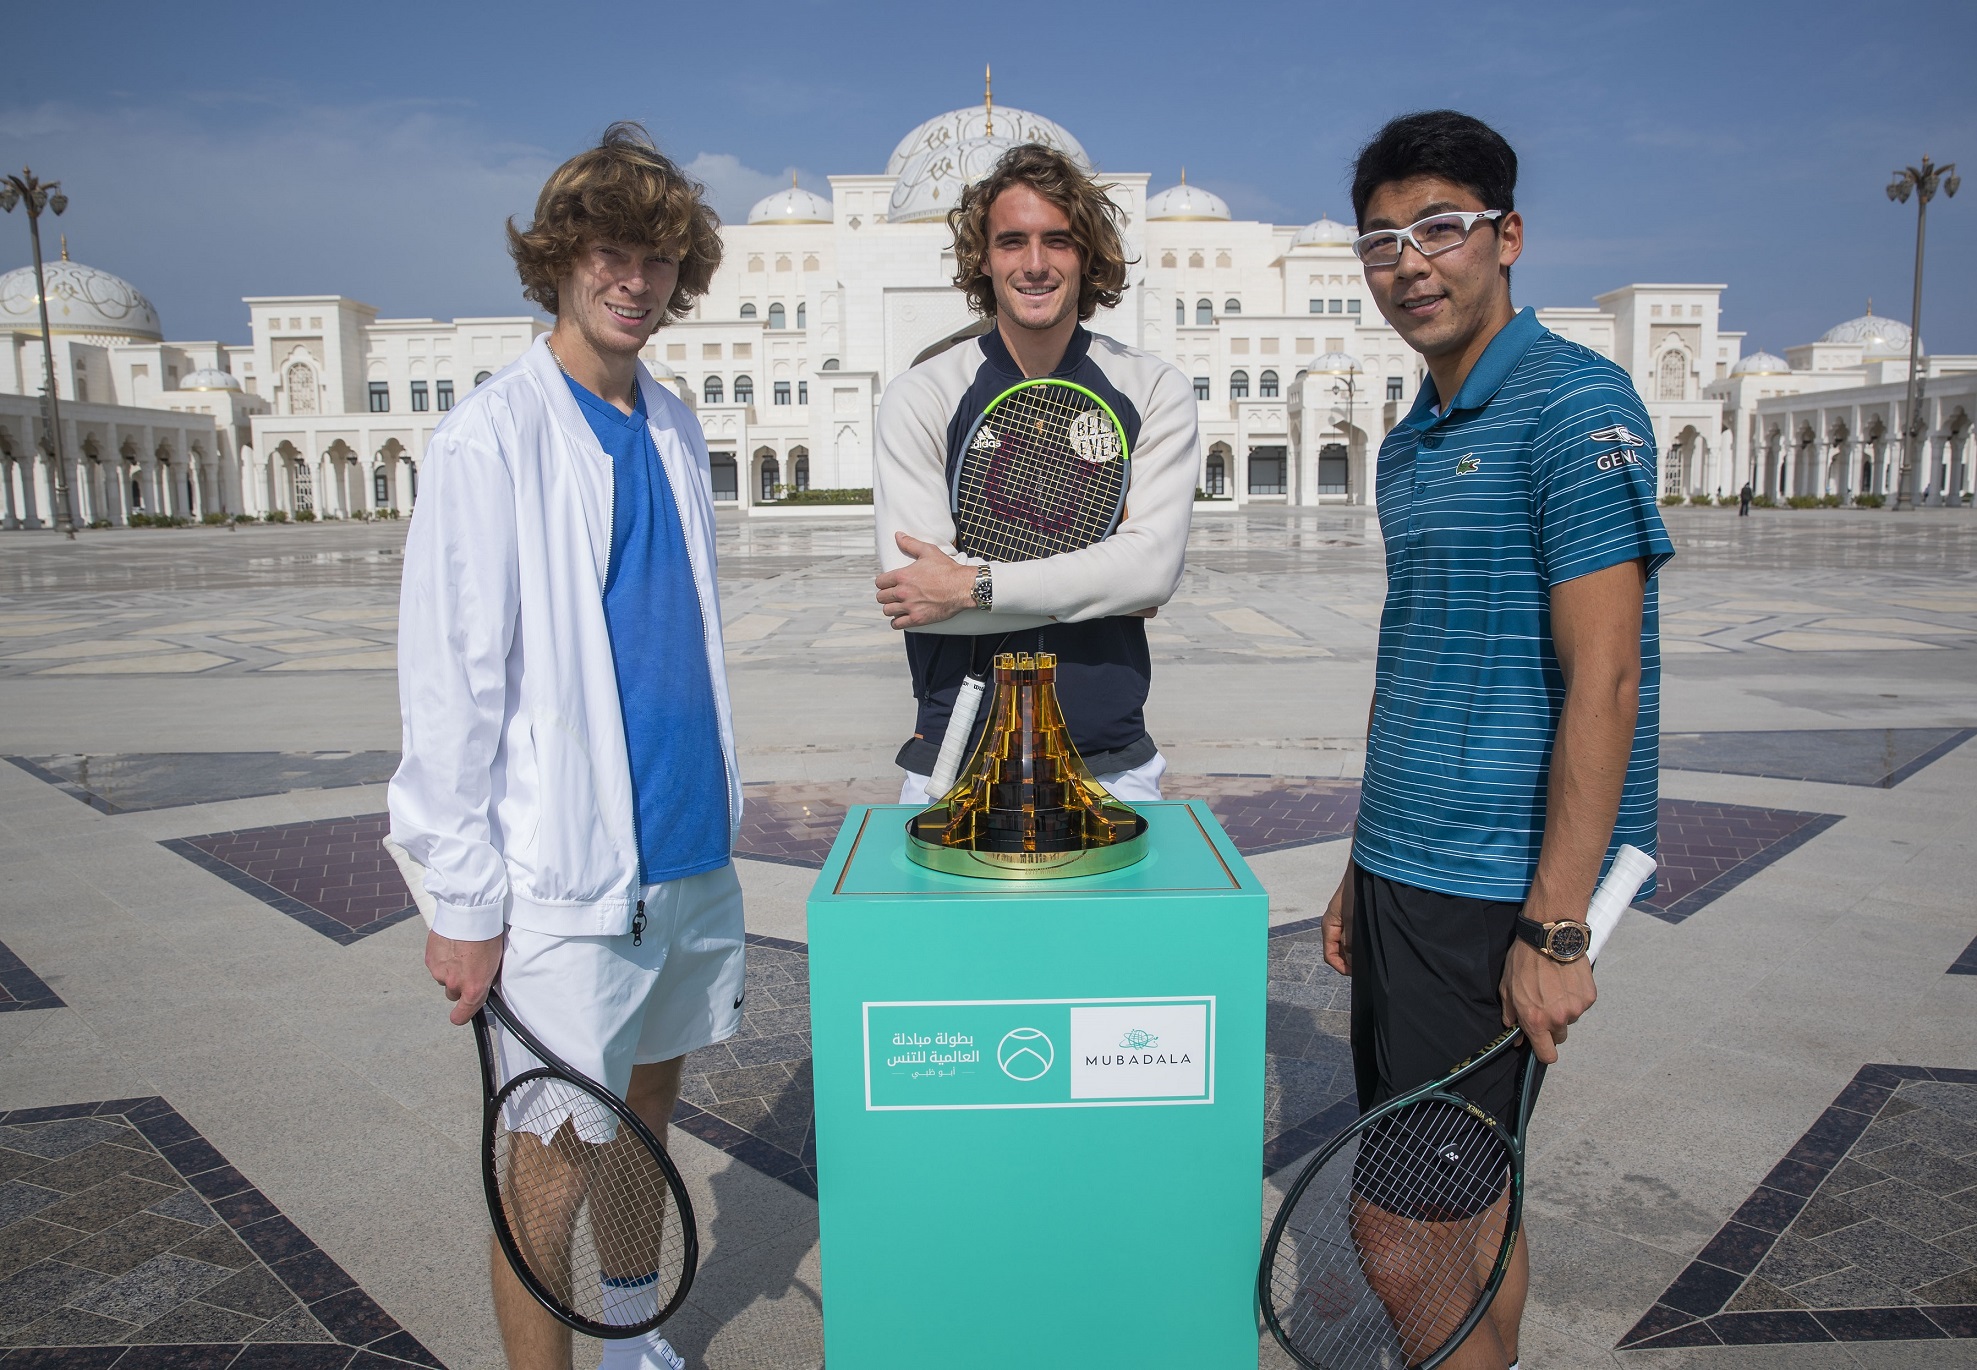 Mubadala World Tennis Championship Trio Visit Abu Dhabi’s Qasr Al Watan